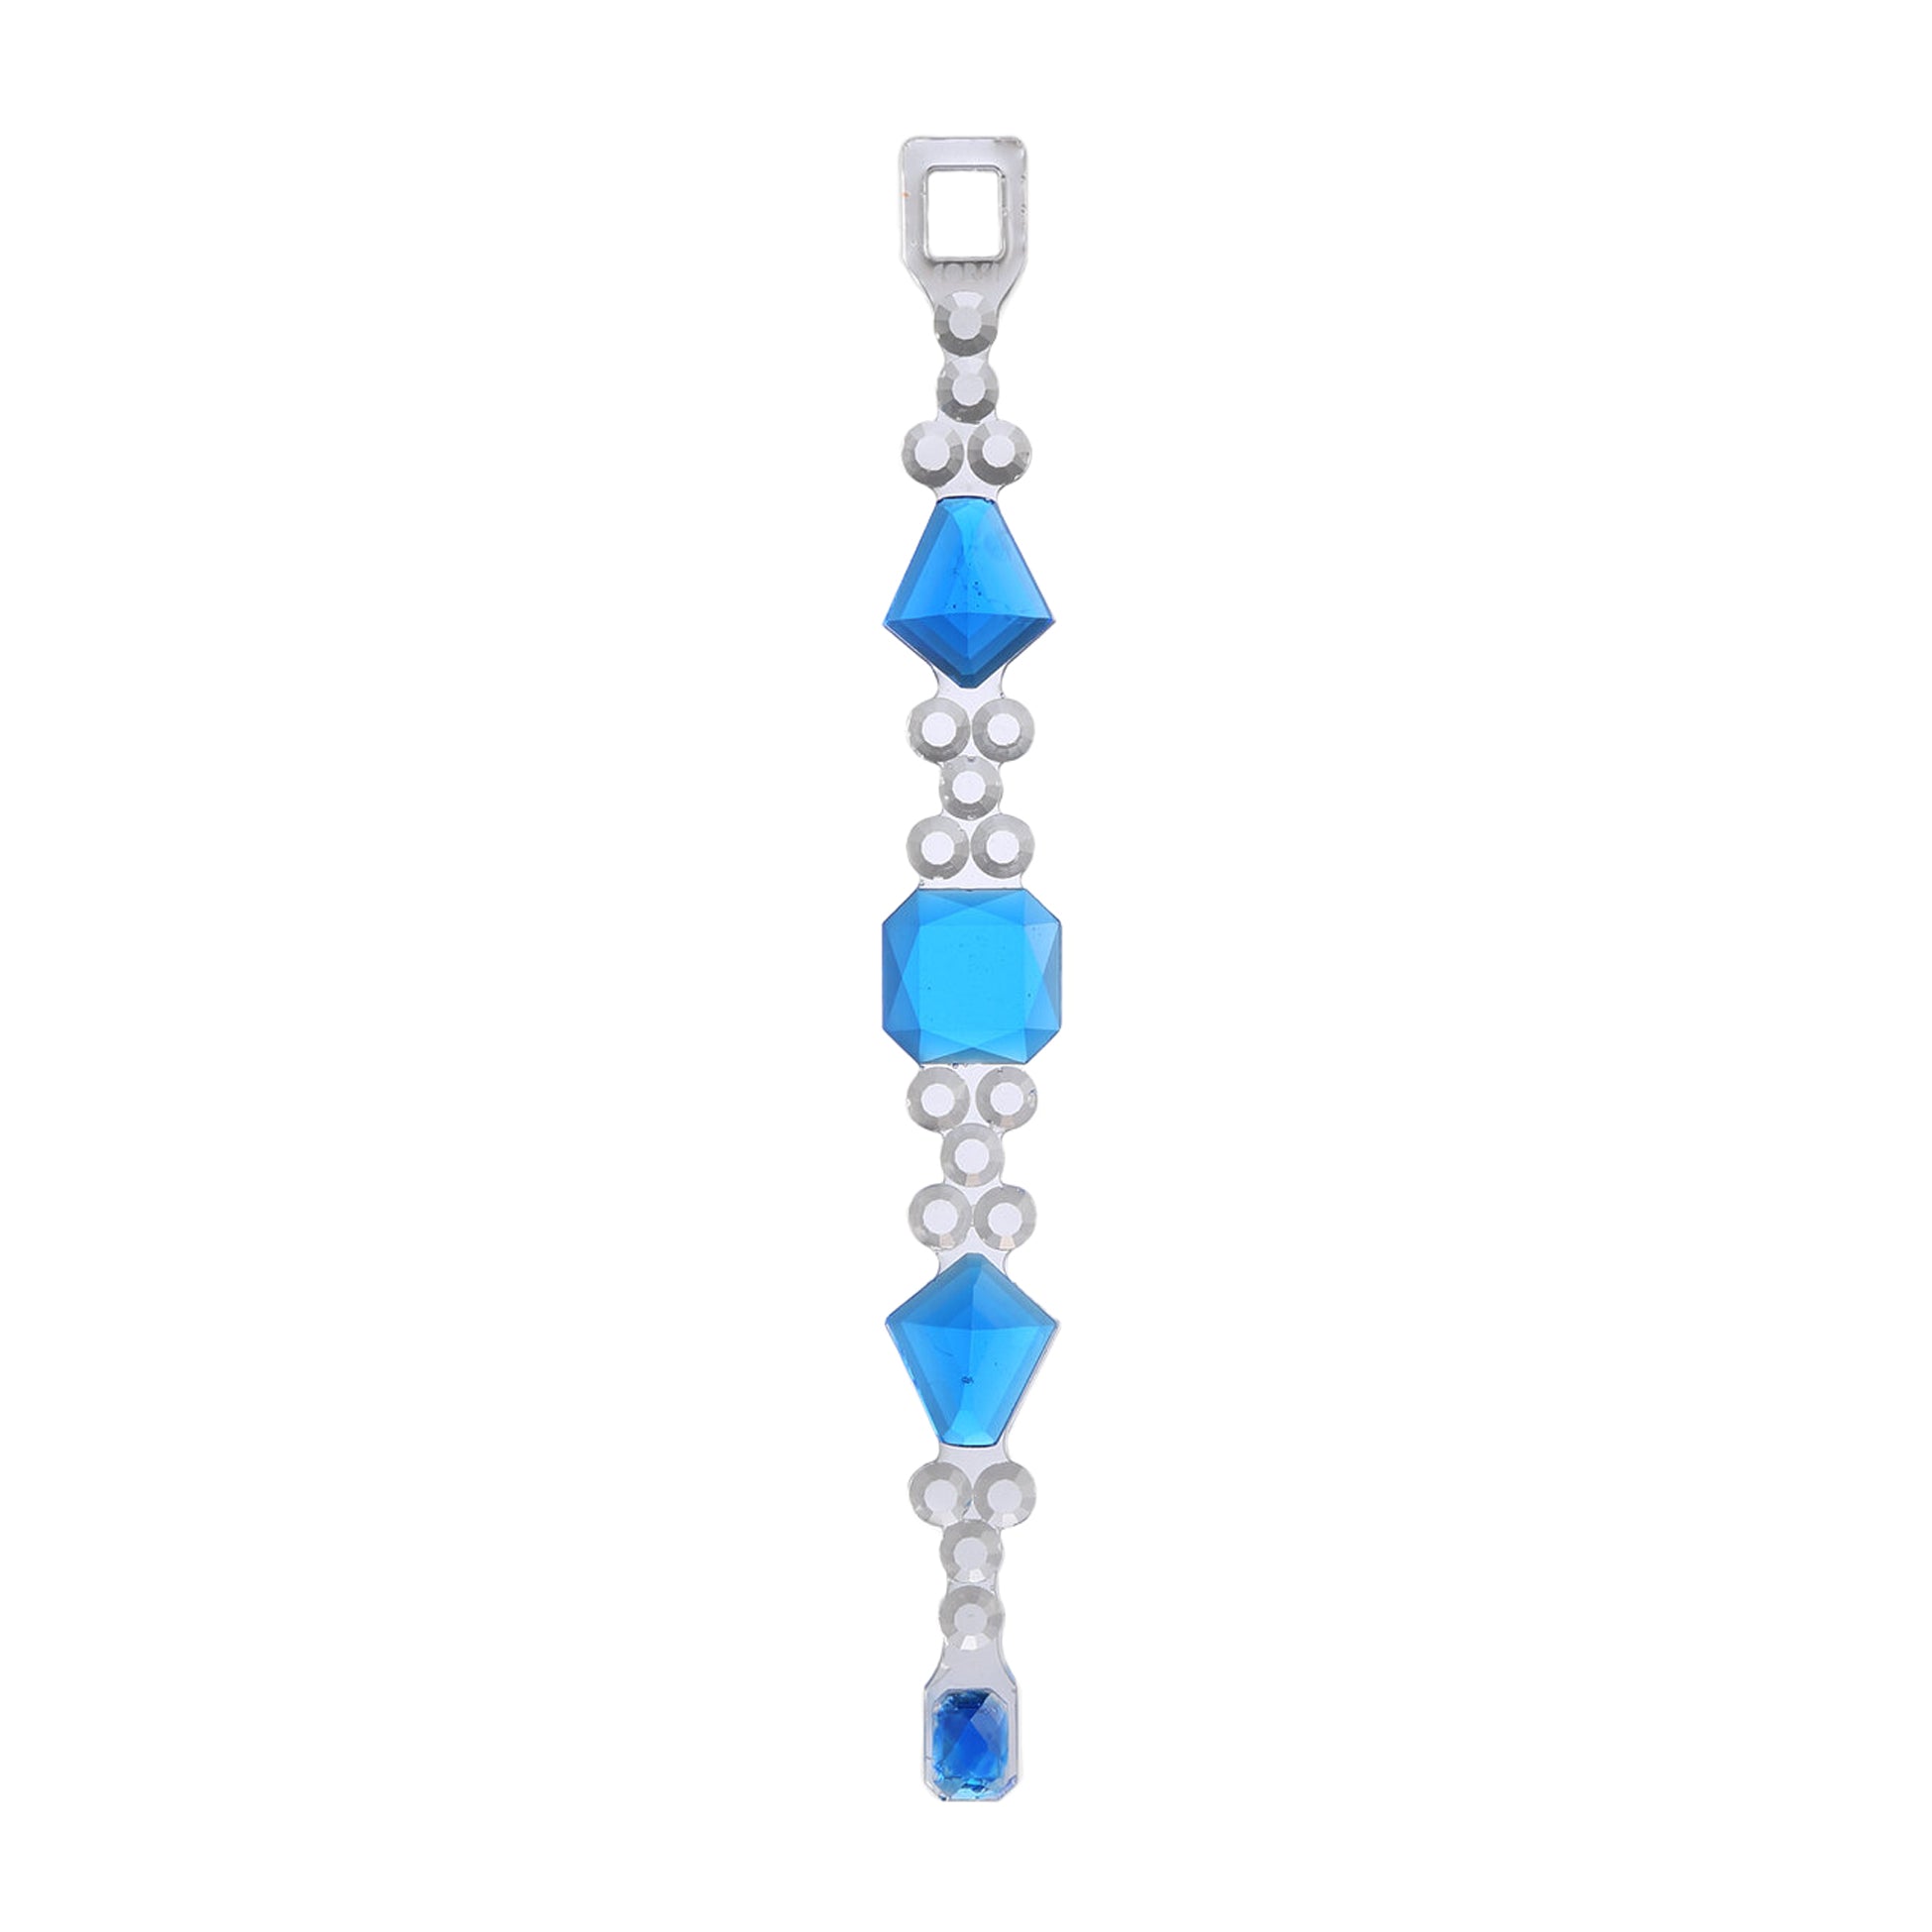 Crown Bracelet Blue│Armband Blauw│Corsari Jewels│foto in lengte witte achtergrond